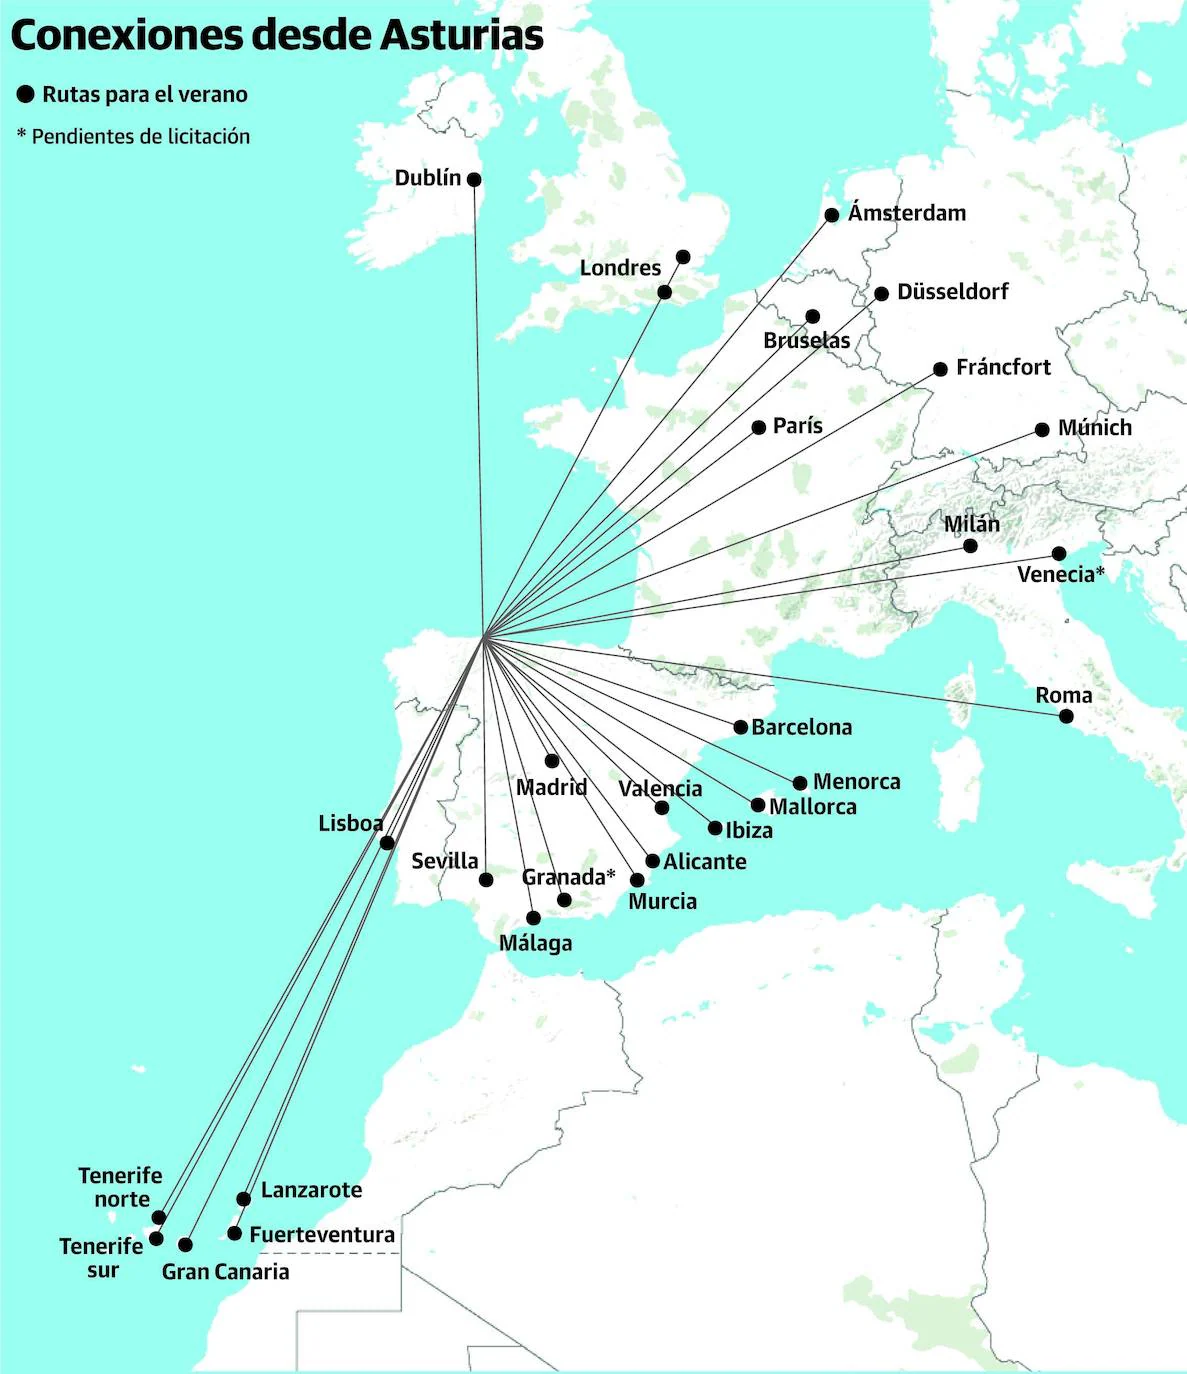 La oferta aérea asturiana a rutas internacionales se dispara 